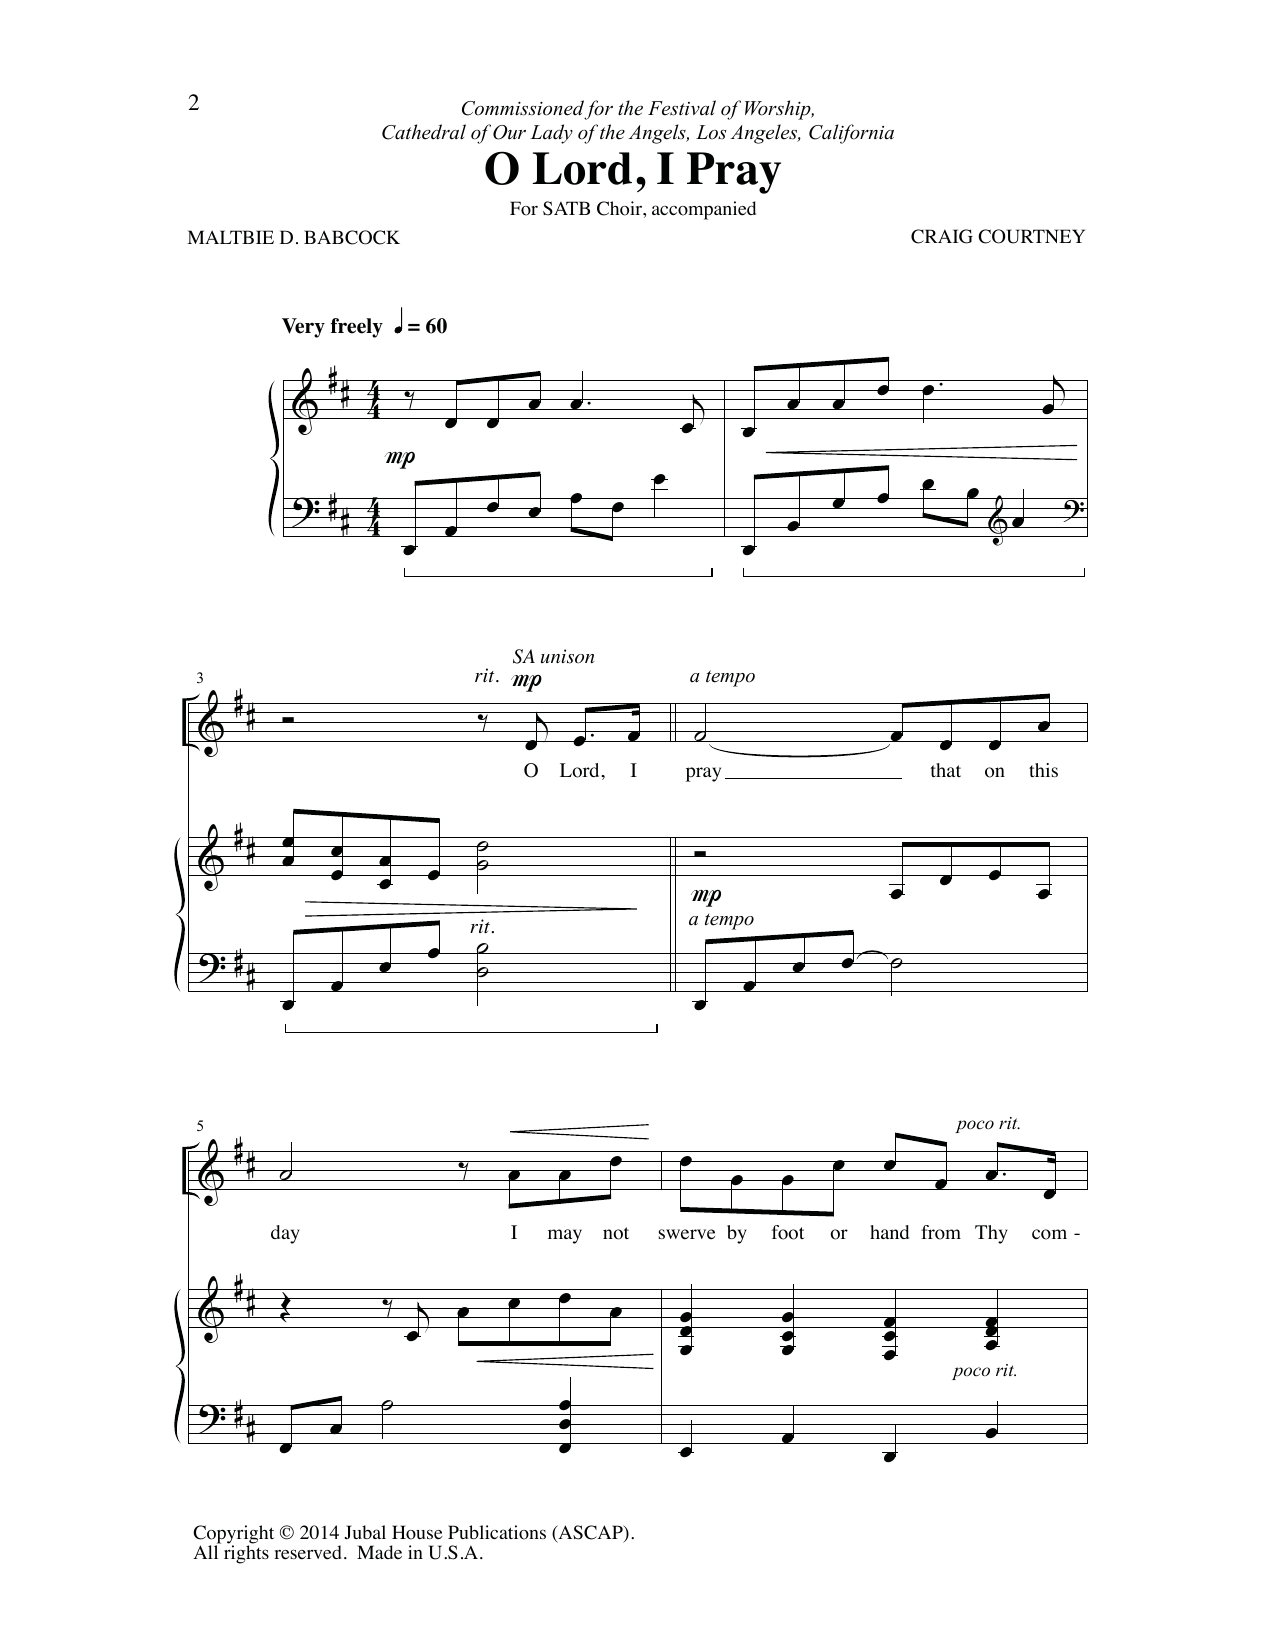 Craig Courtney O Lord, I Pray Sheet Music Notes & Chords for SATB Choir - Download or Print PDF